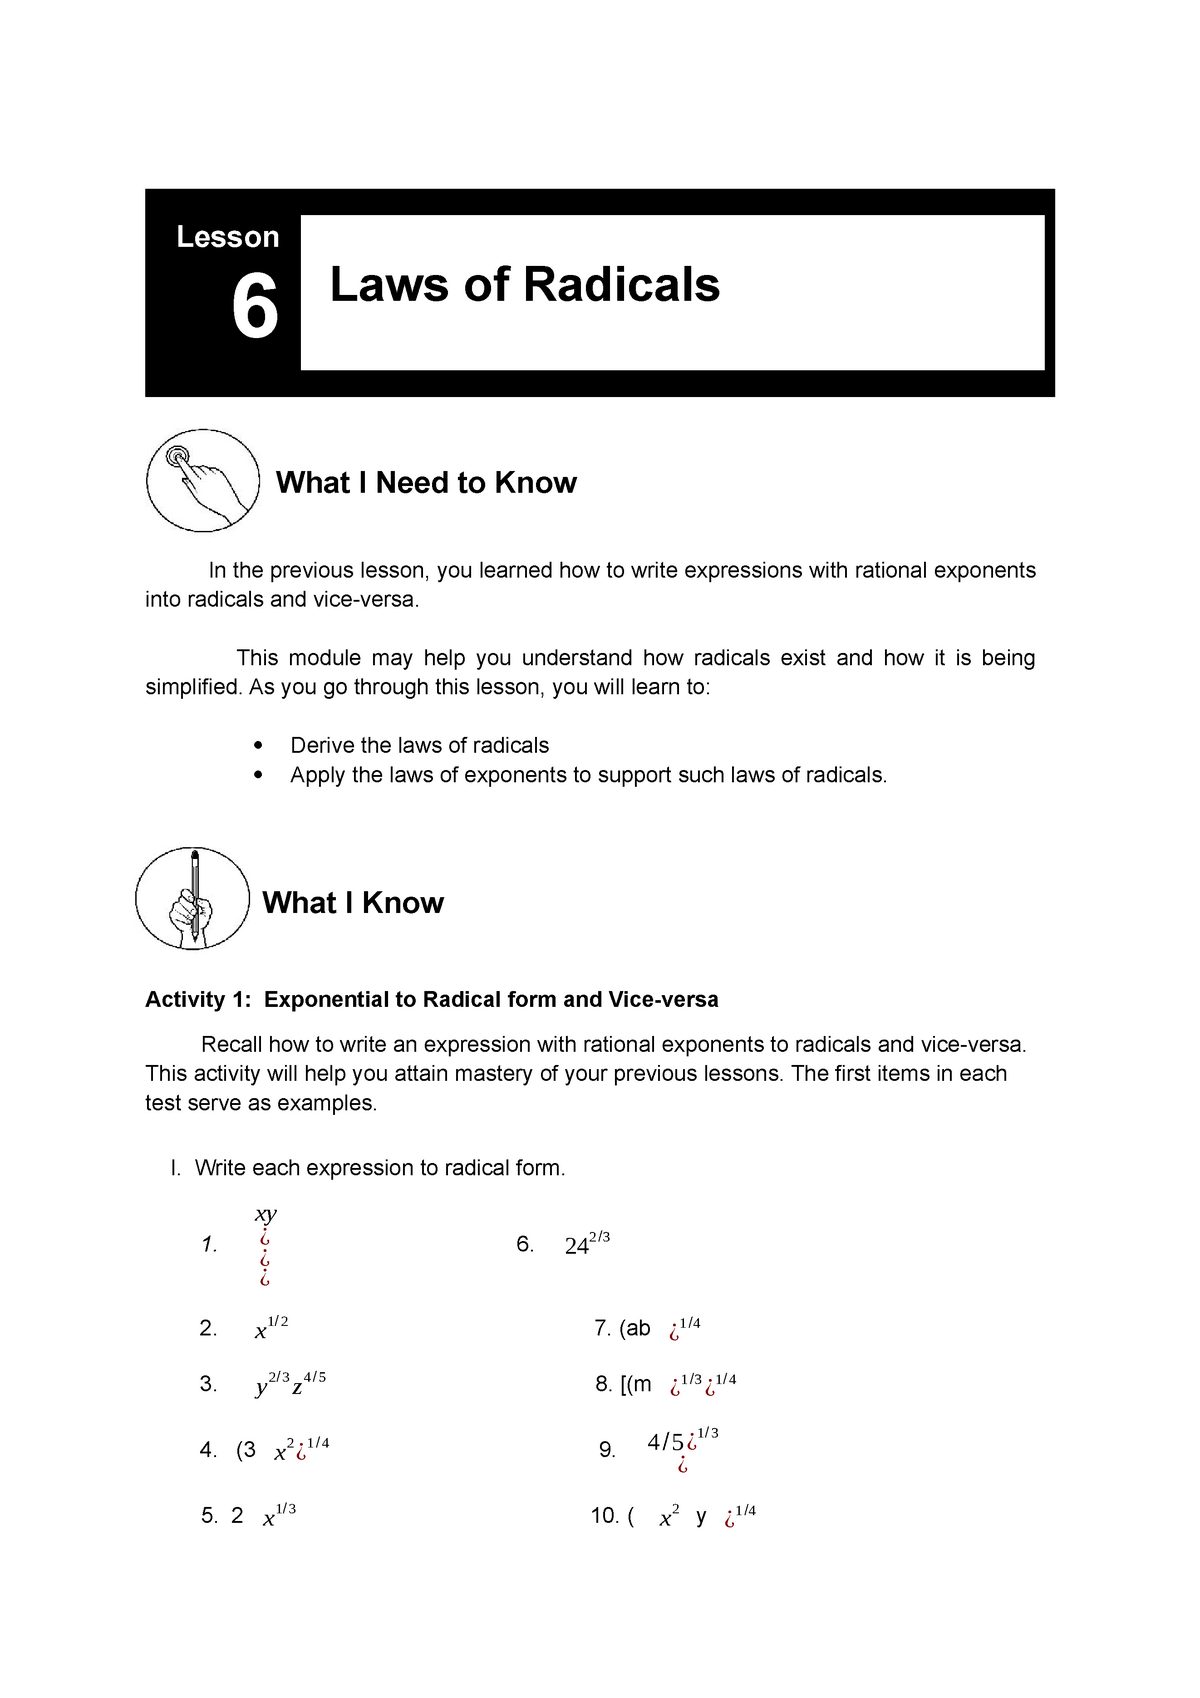 assignment 2 law of radicals quizlet